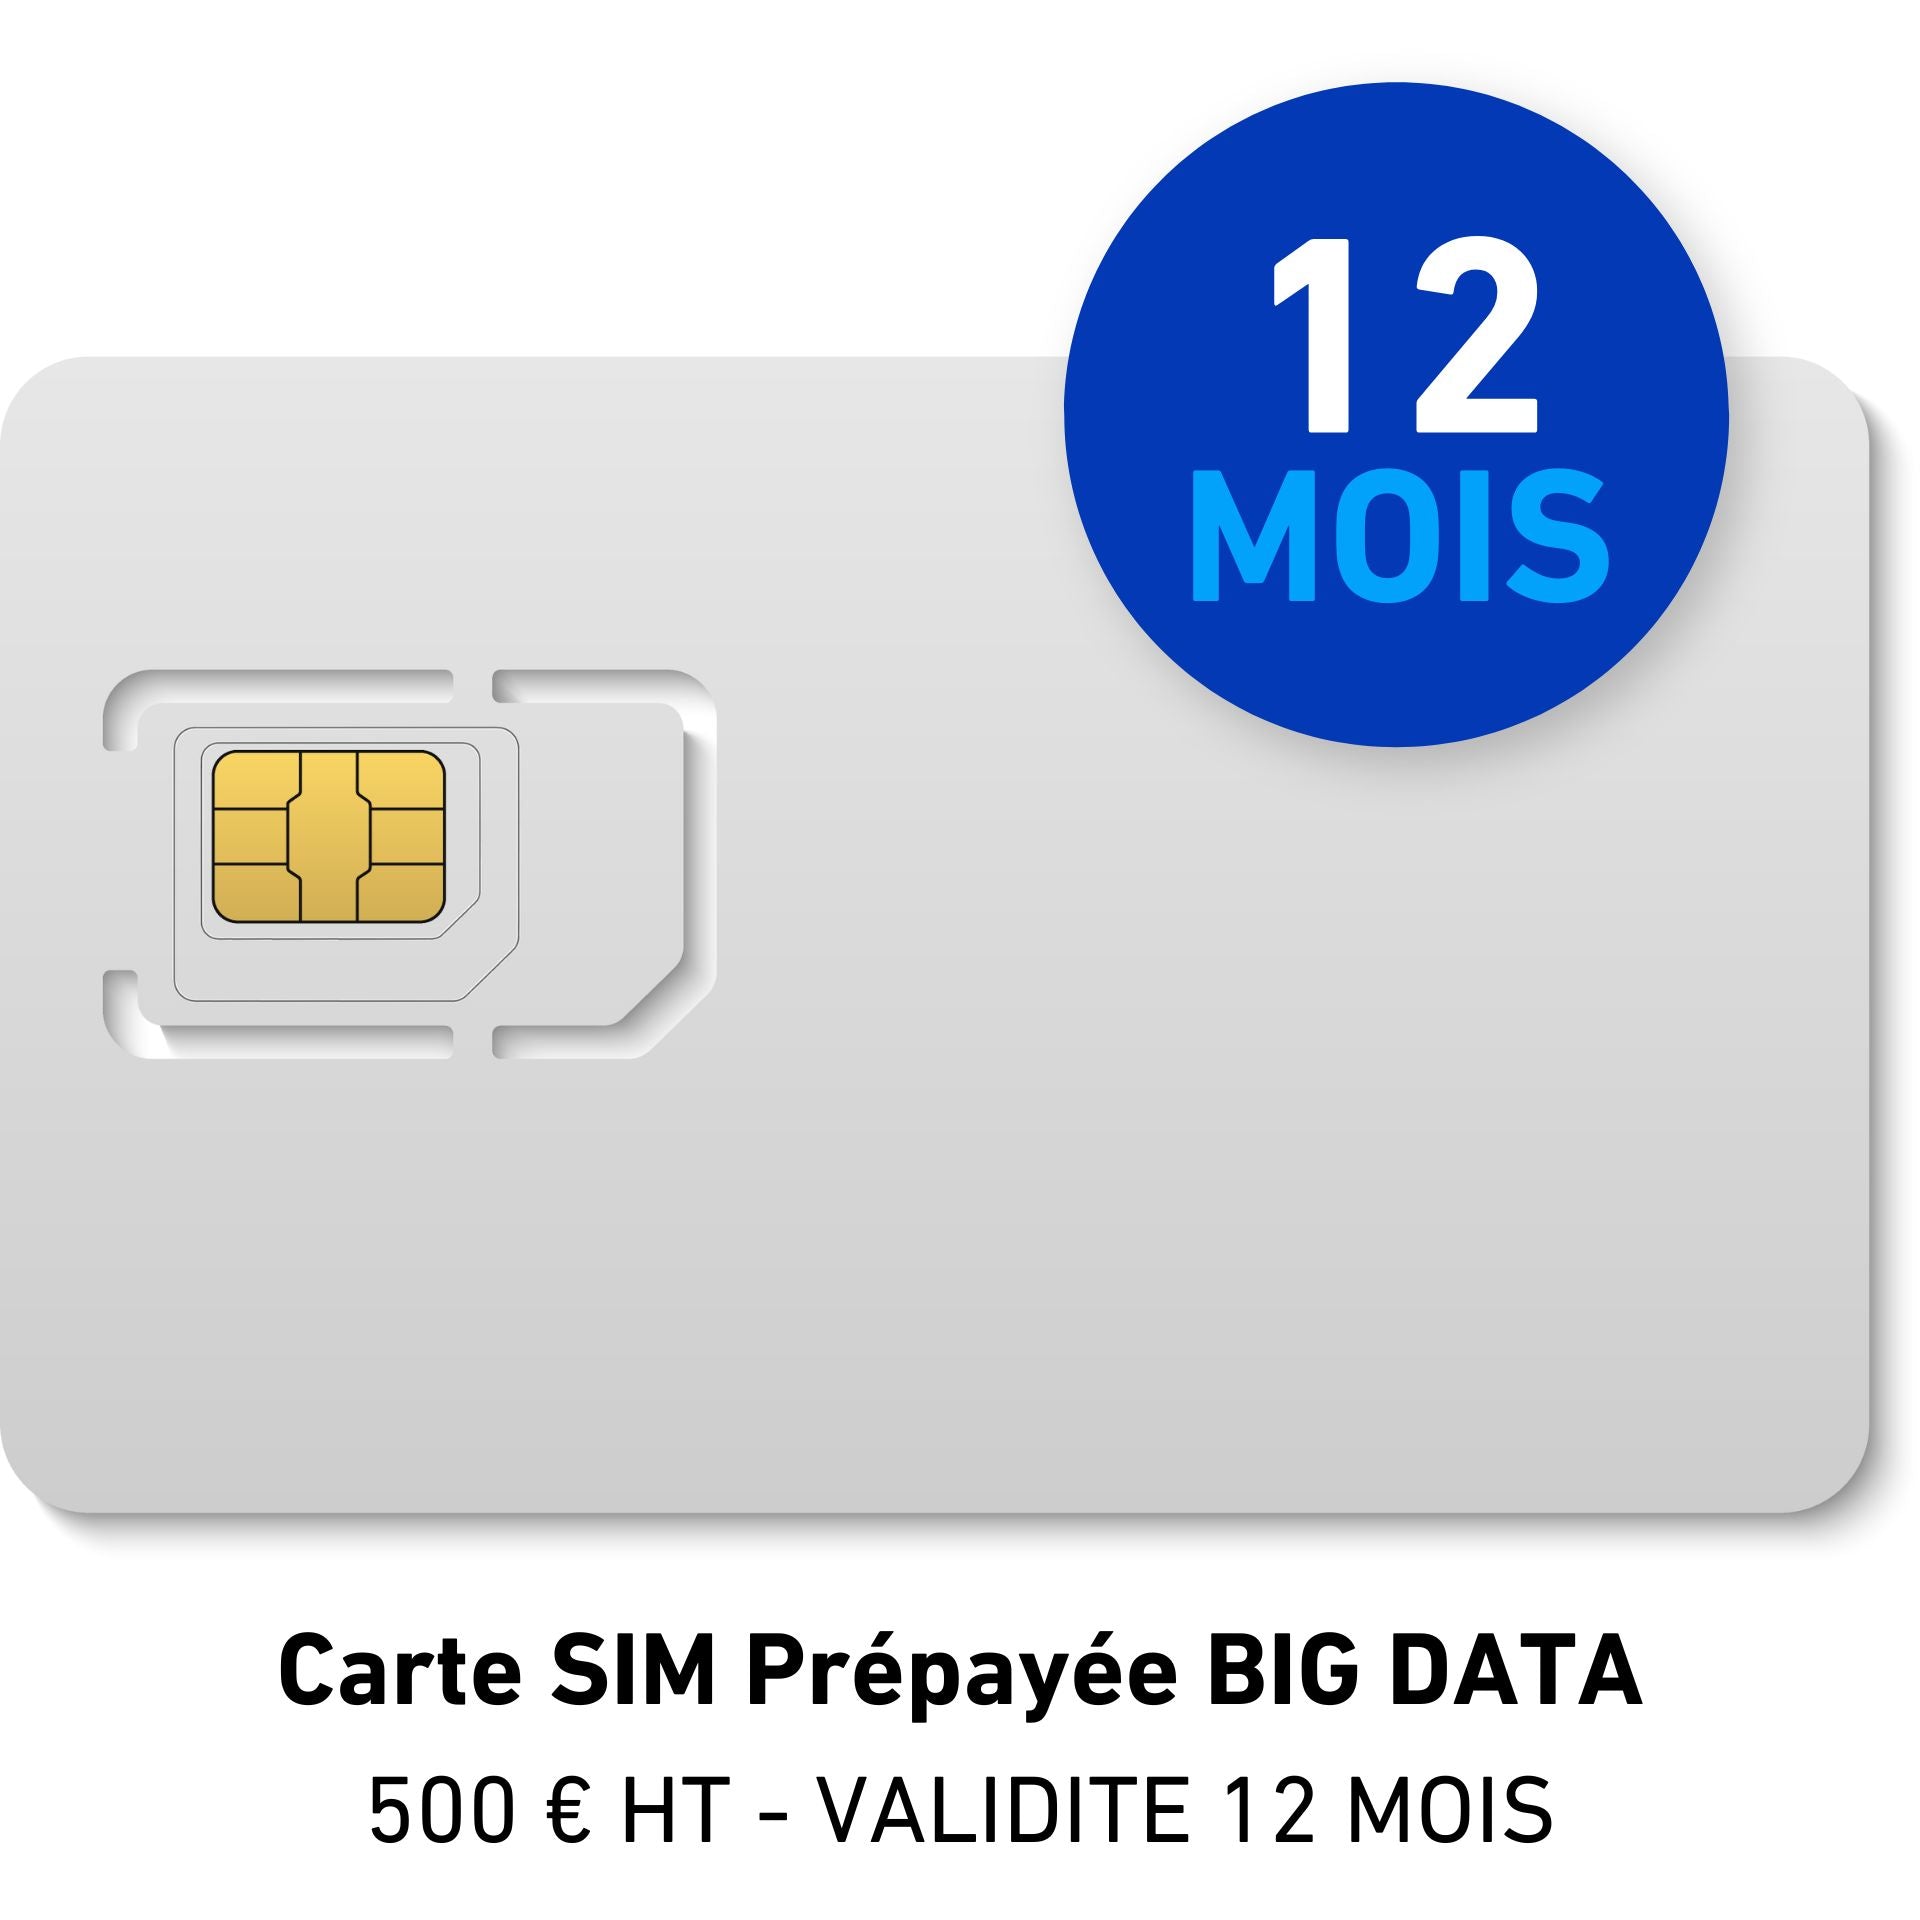 Carte SIM Prépayée BIG DATA 500 € HT - VALIDITE 12 MOIS